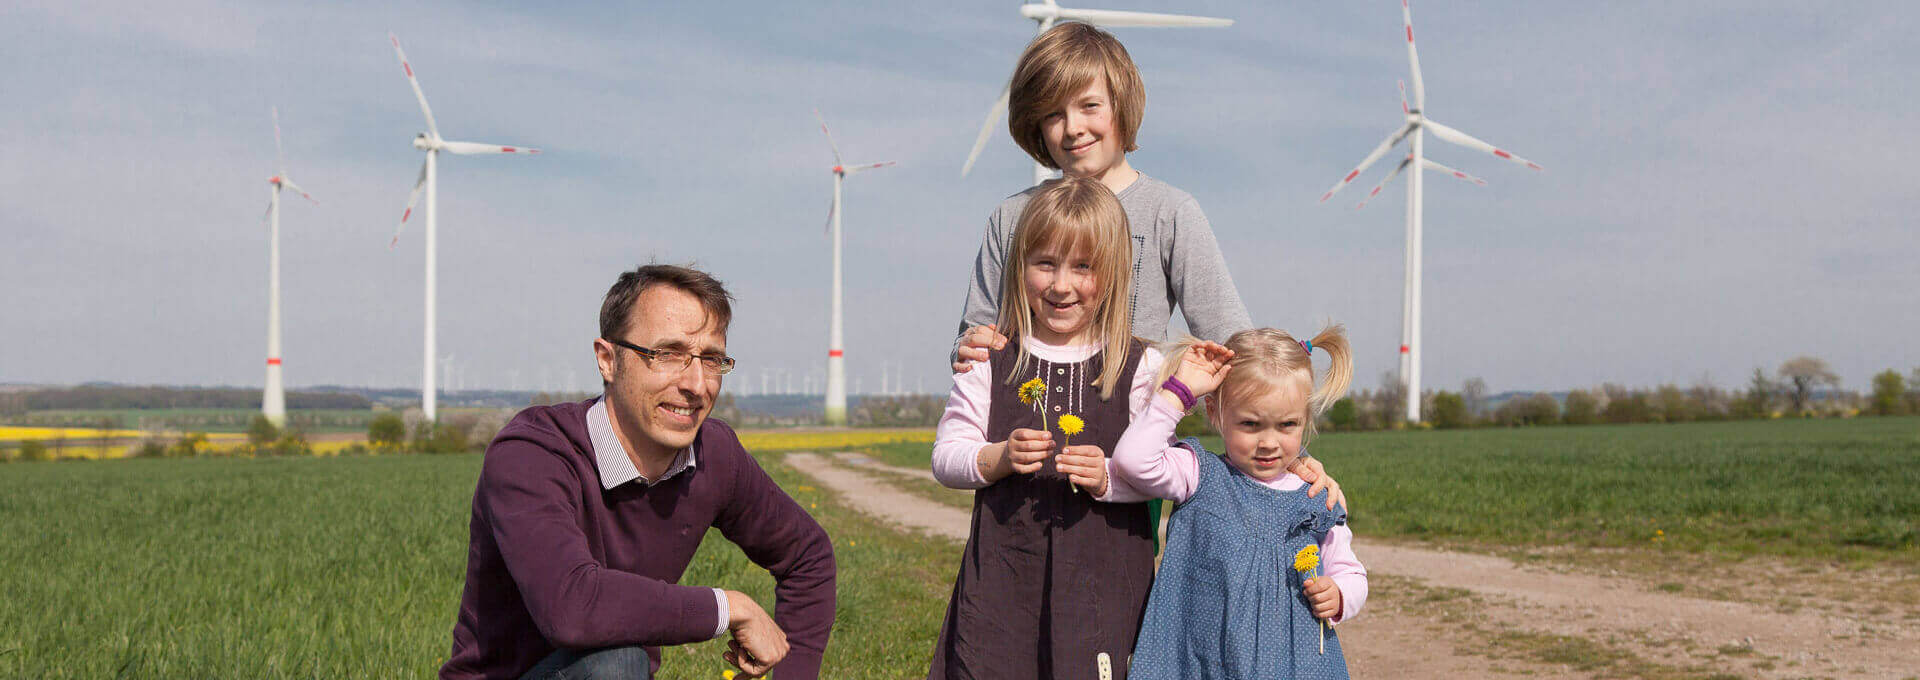 Windenergie Bürger